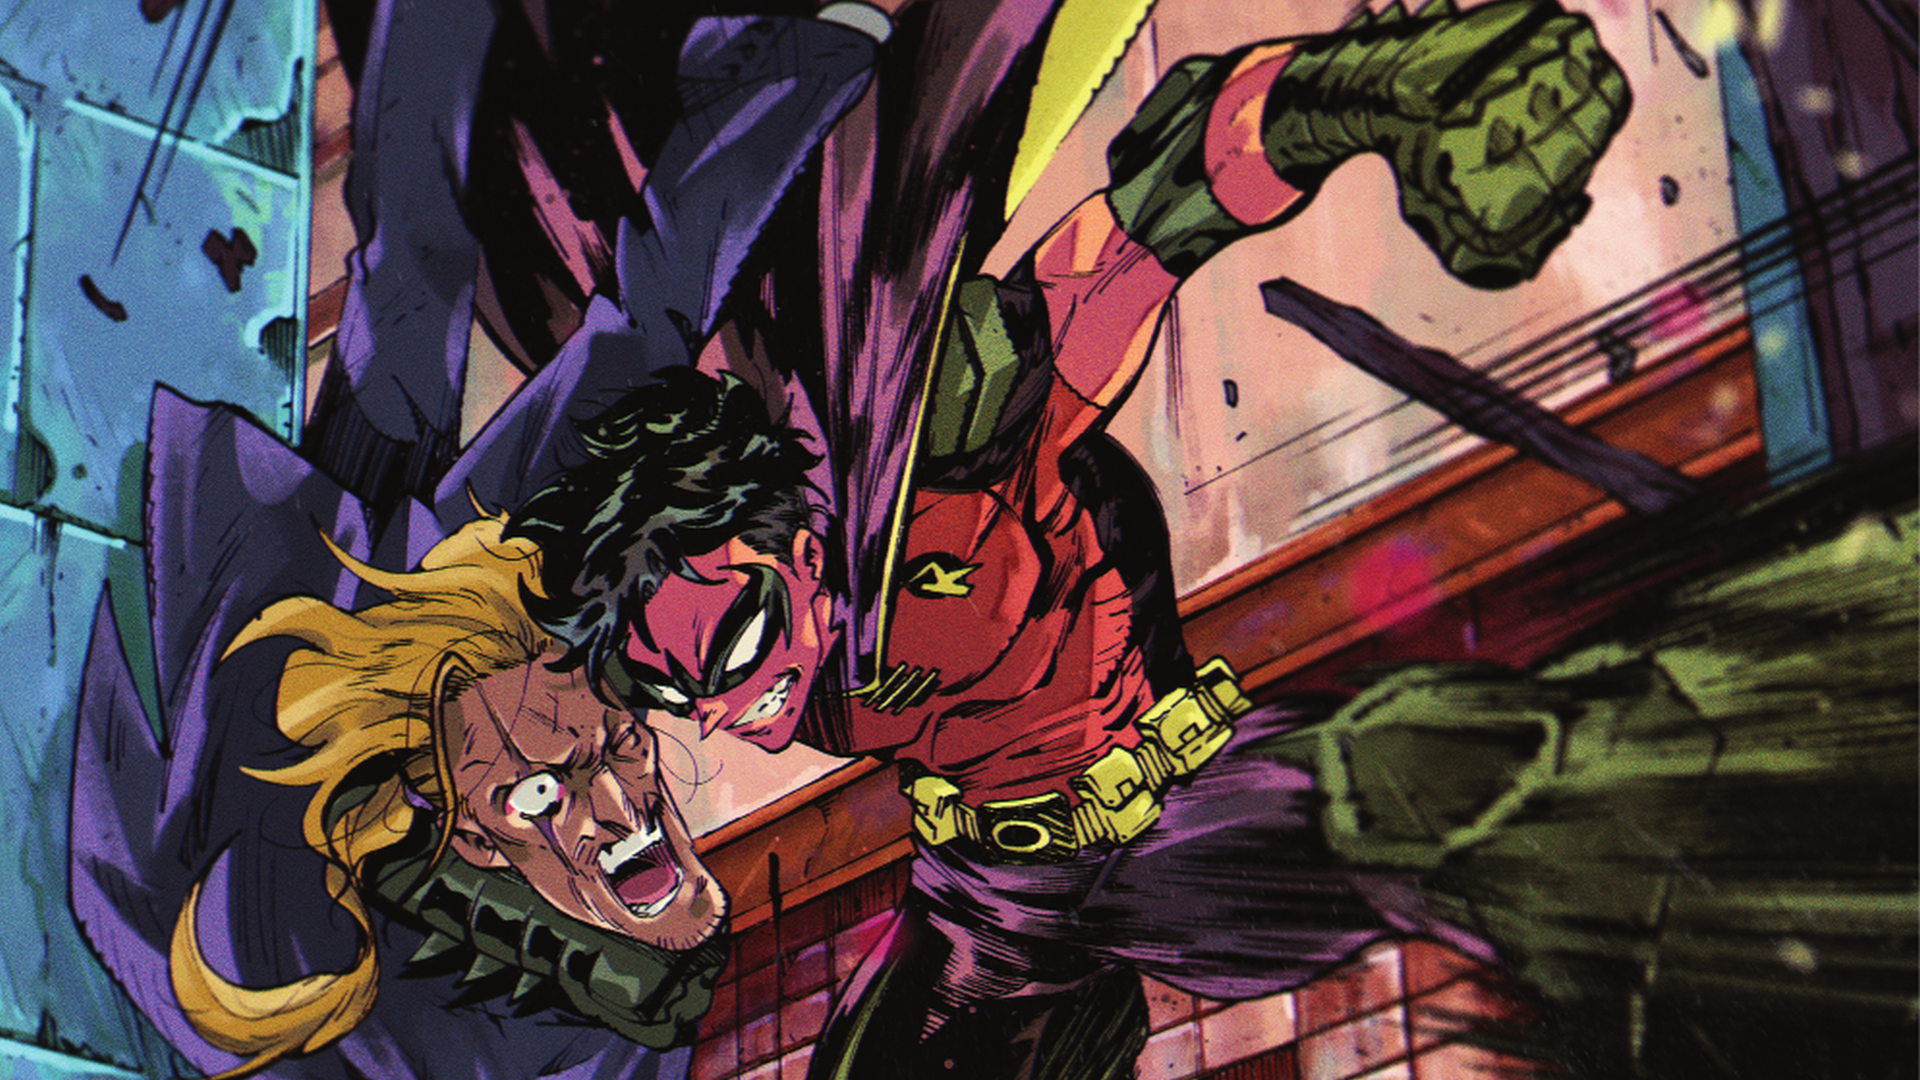 Batman's sidekick, Robin, comes out as LGBTQ+ in new comic